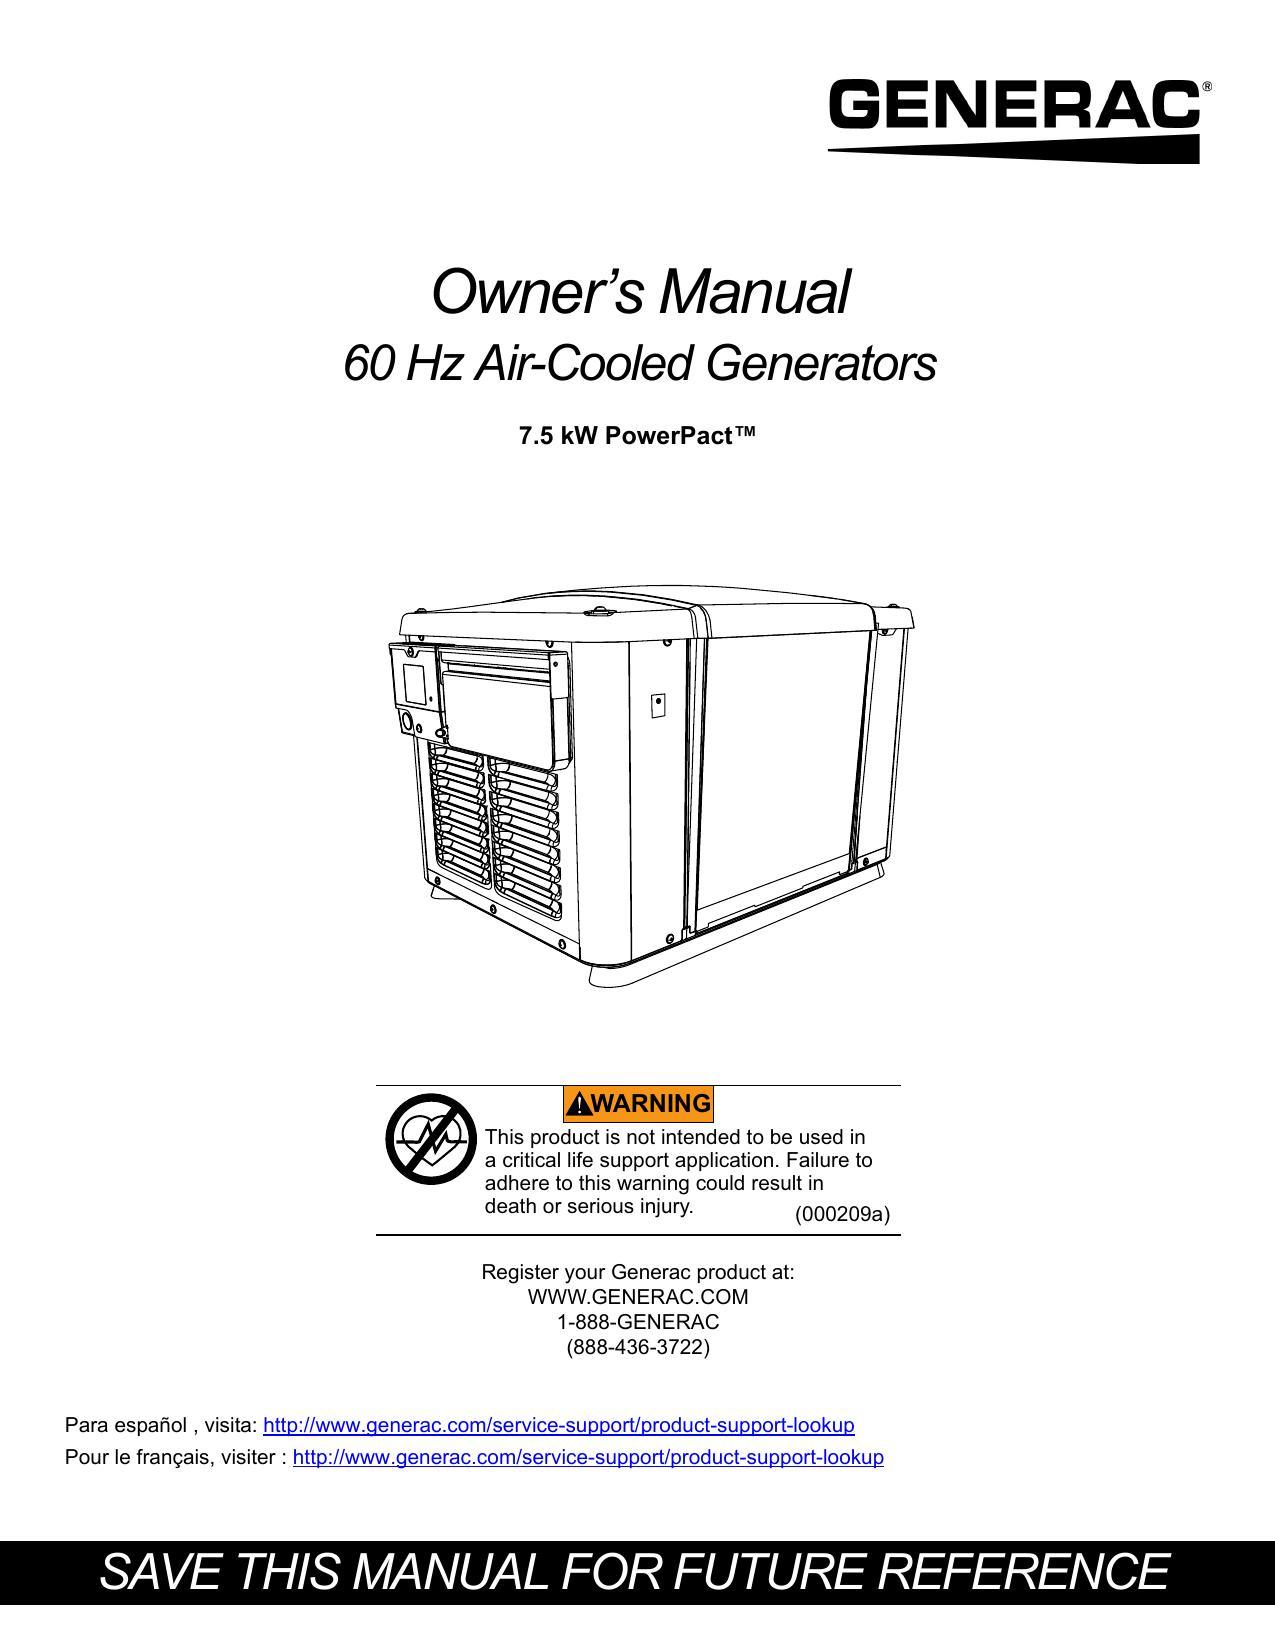 generac-75-kw-powerpacttm-60-hz-air-cooled-generators-owners-manual.pdf